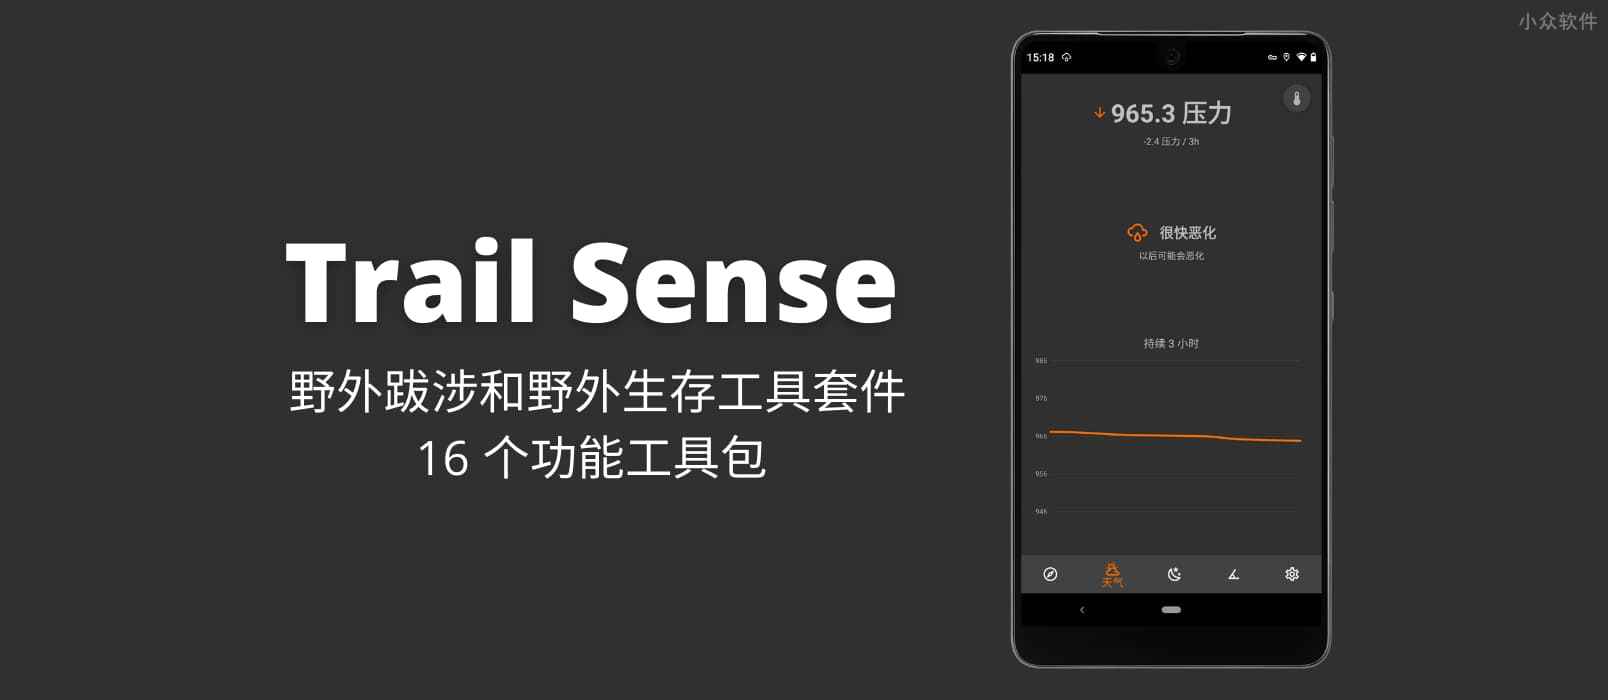 Trail Sense - 利用 Android 传感器的 21 个野外跋涉和野外生存工具套件